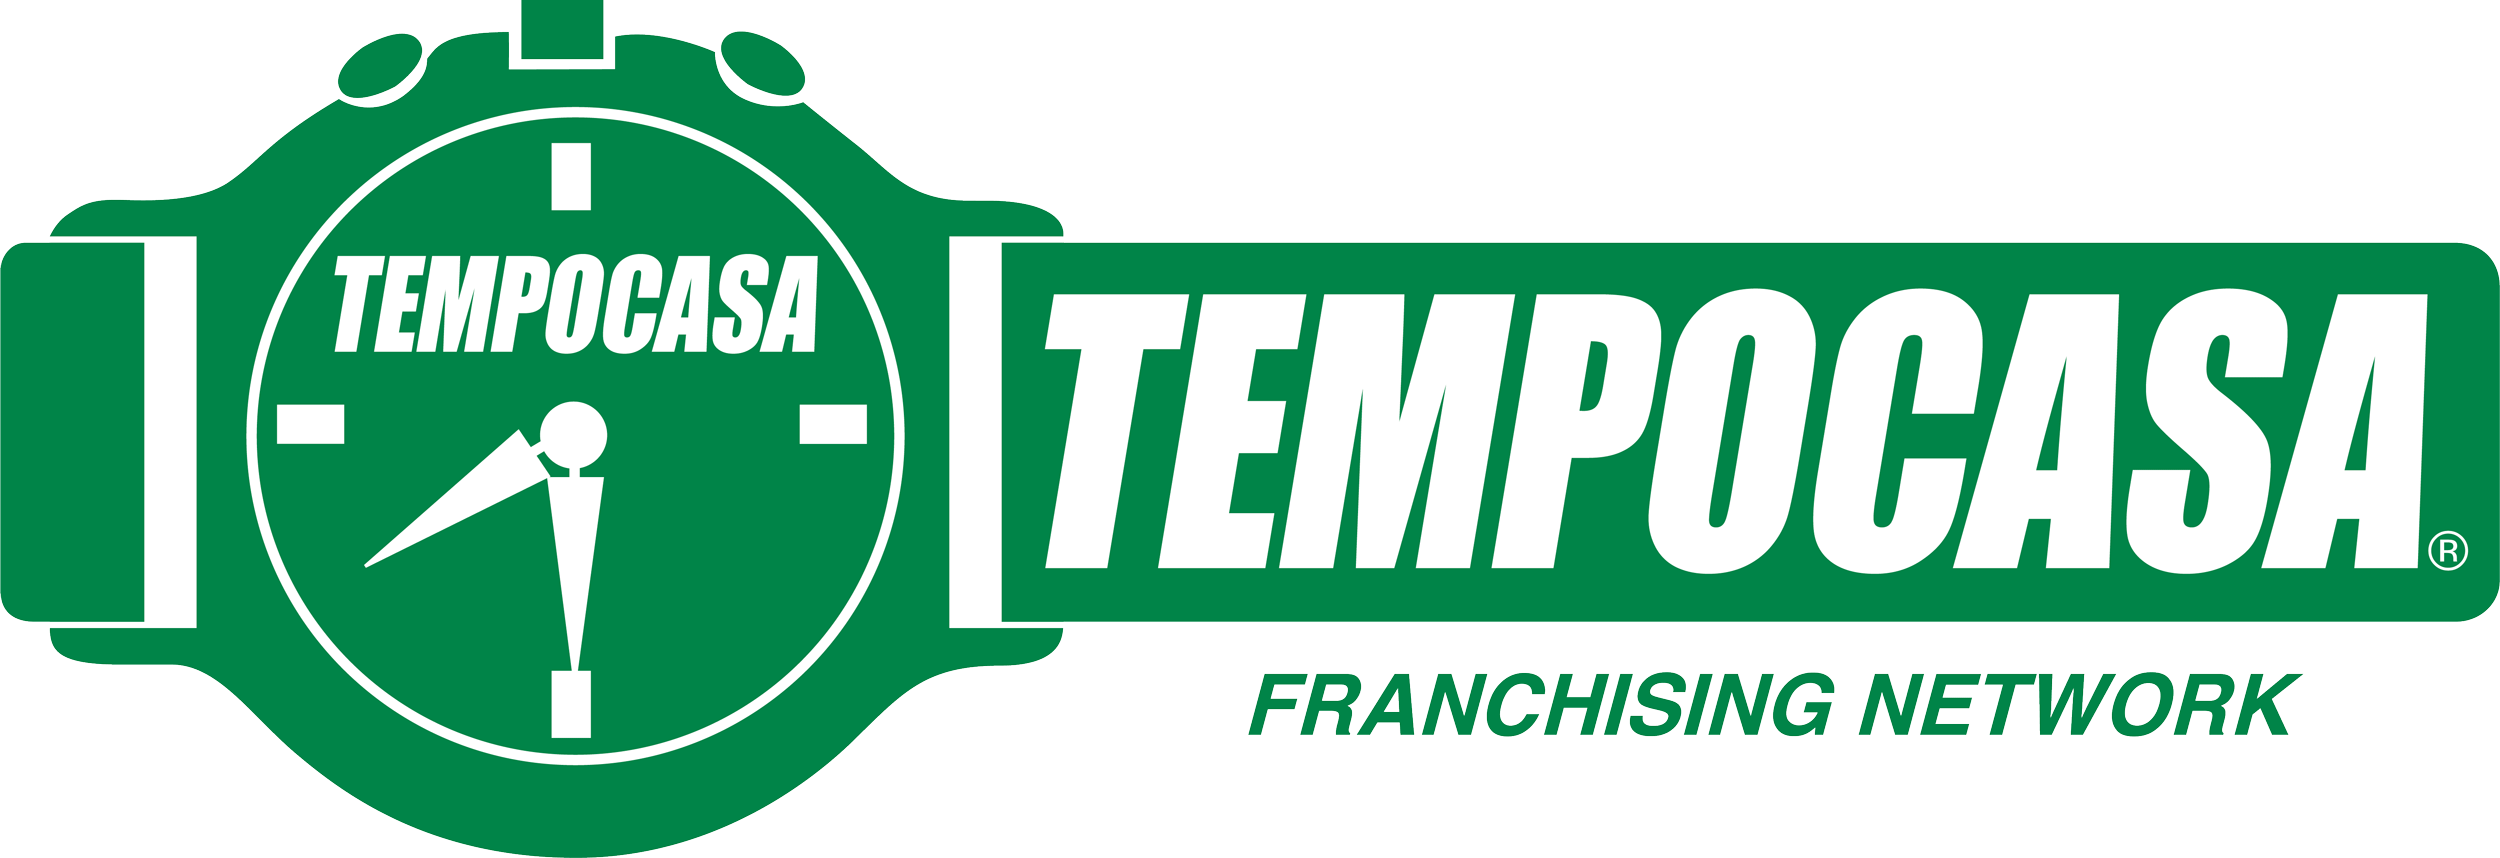 Torino - Campidoglio - Tempocasa